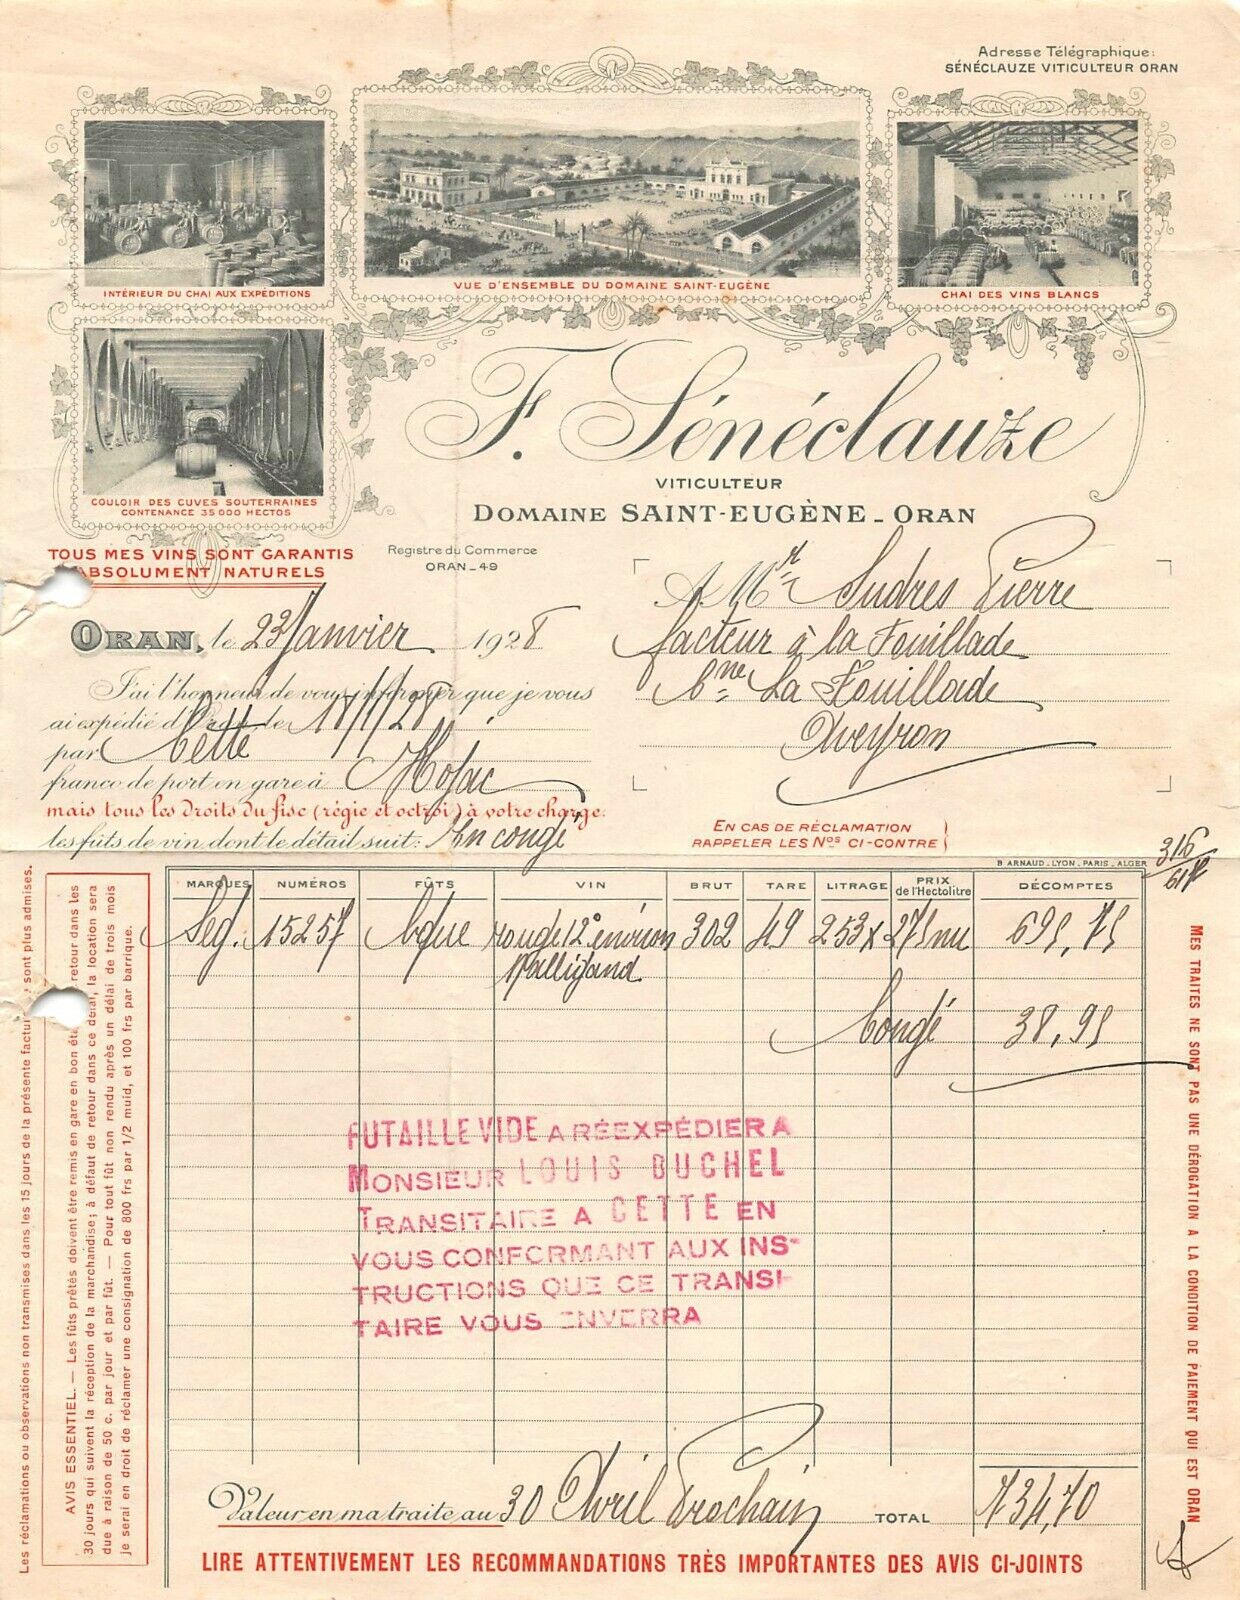 Antique Invoice Wine - Domaine Saint-Eugène - F Séméclauze IN Oran 1928